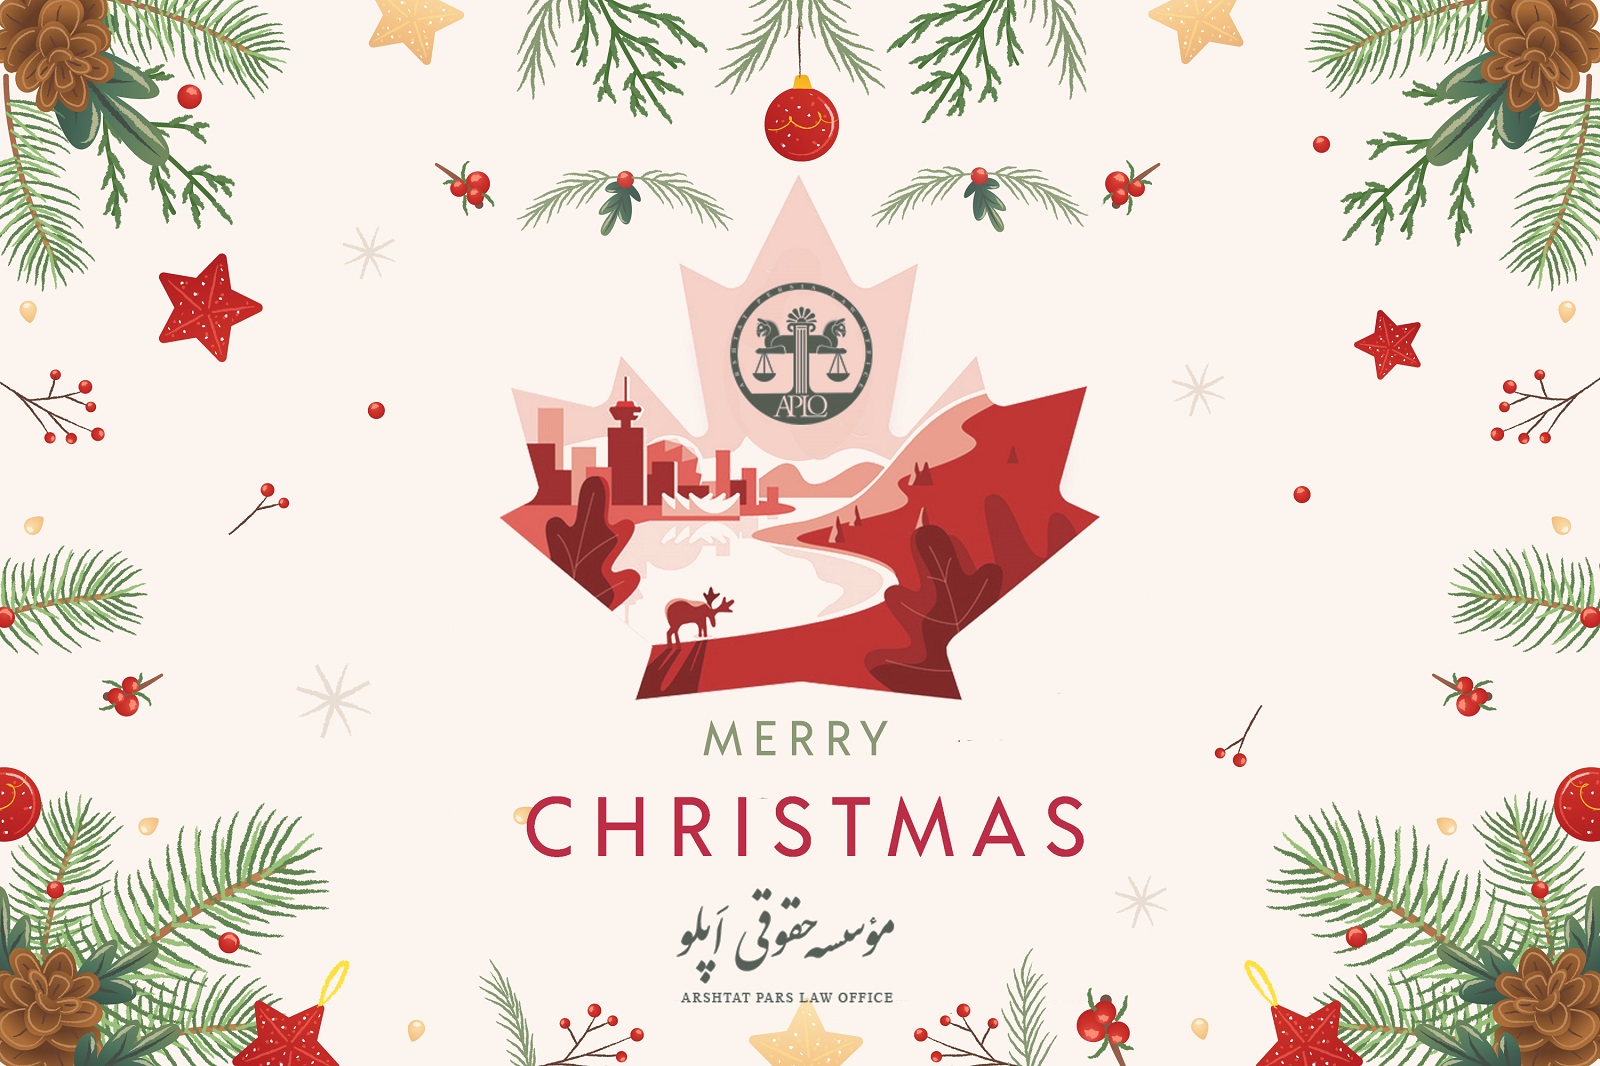 تبریک جشن کریسمس و تعطیلات سال 2020 - ایران اپلو